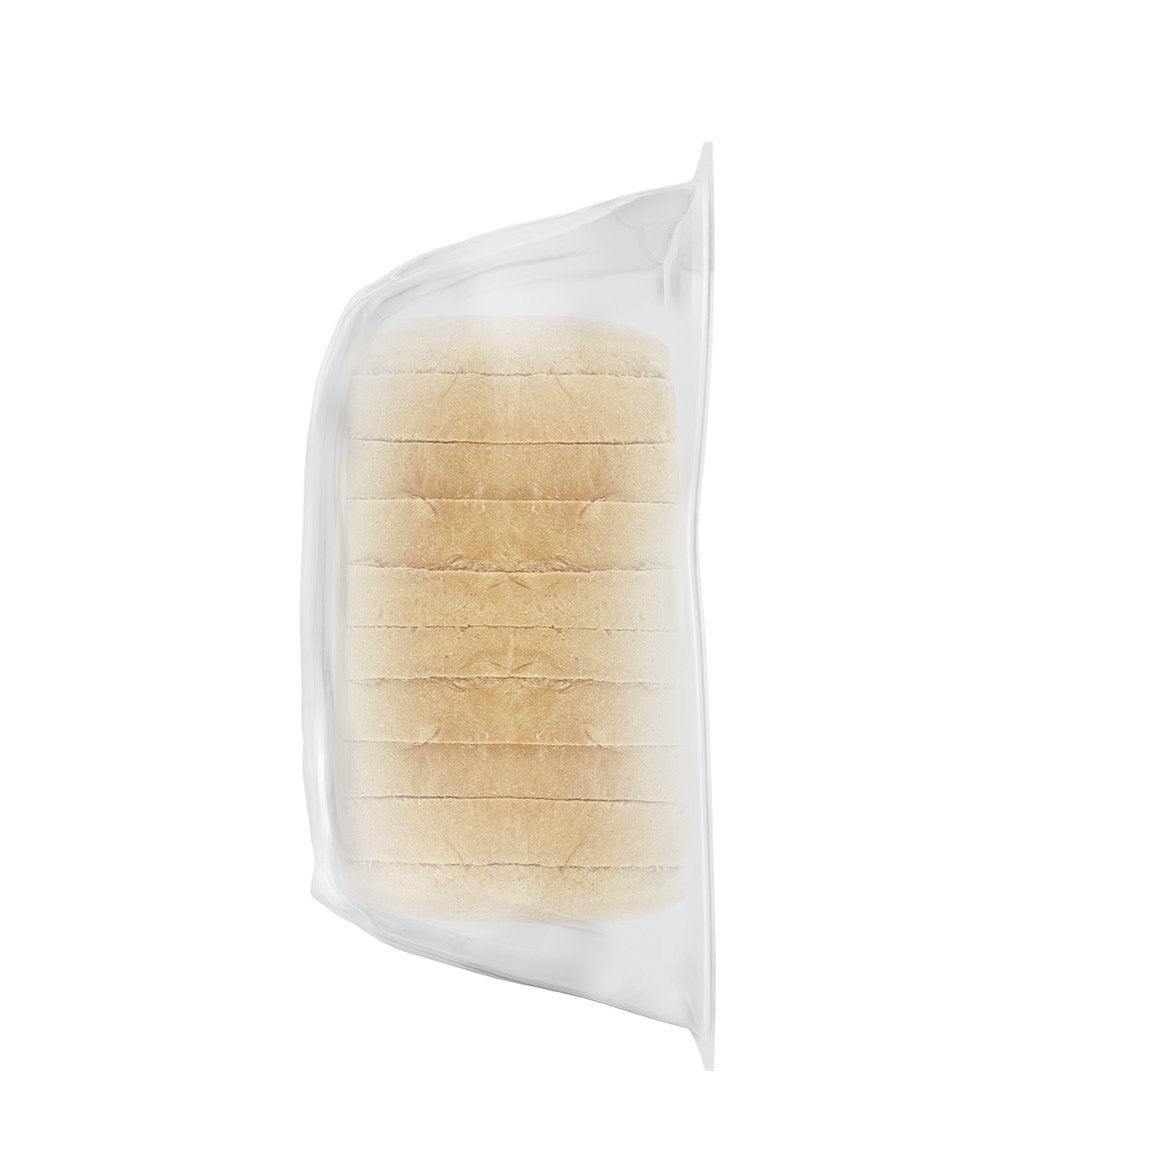 Schar Pan Blanco White Sliced Bread, Gluten Free - 250gr